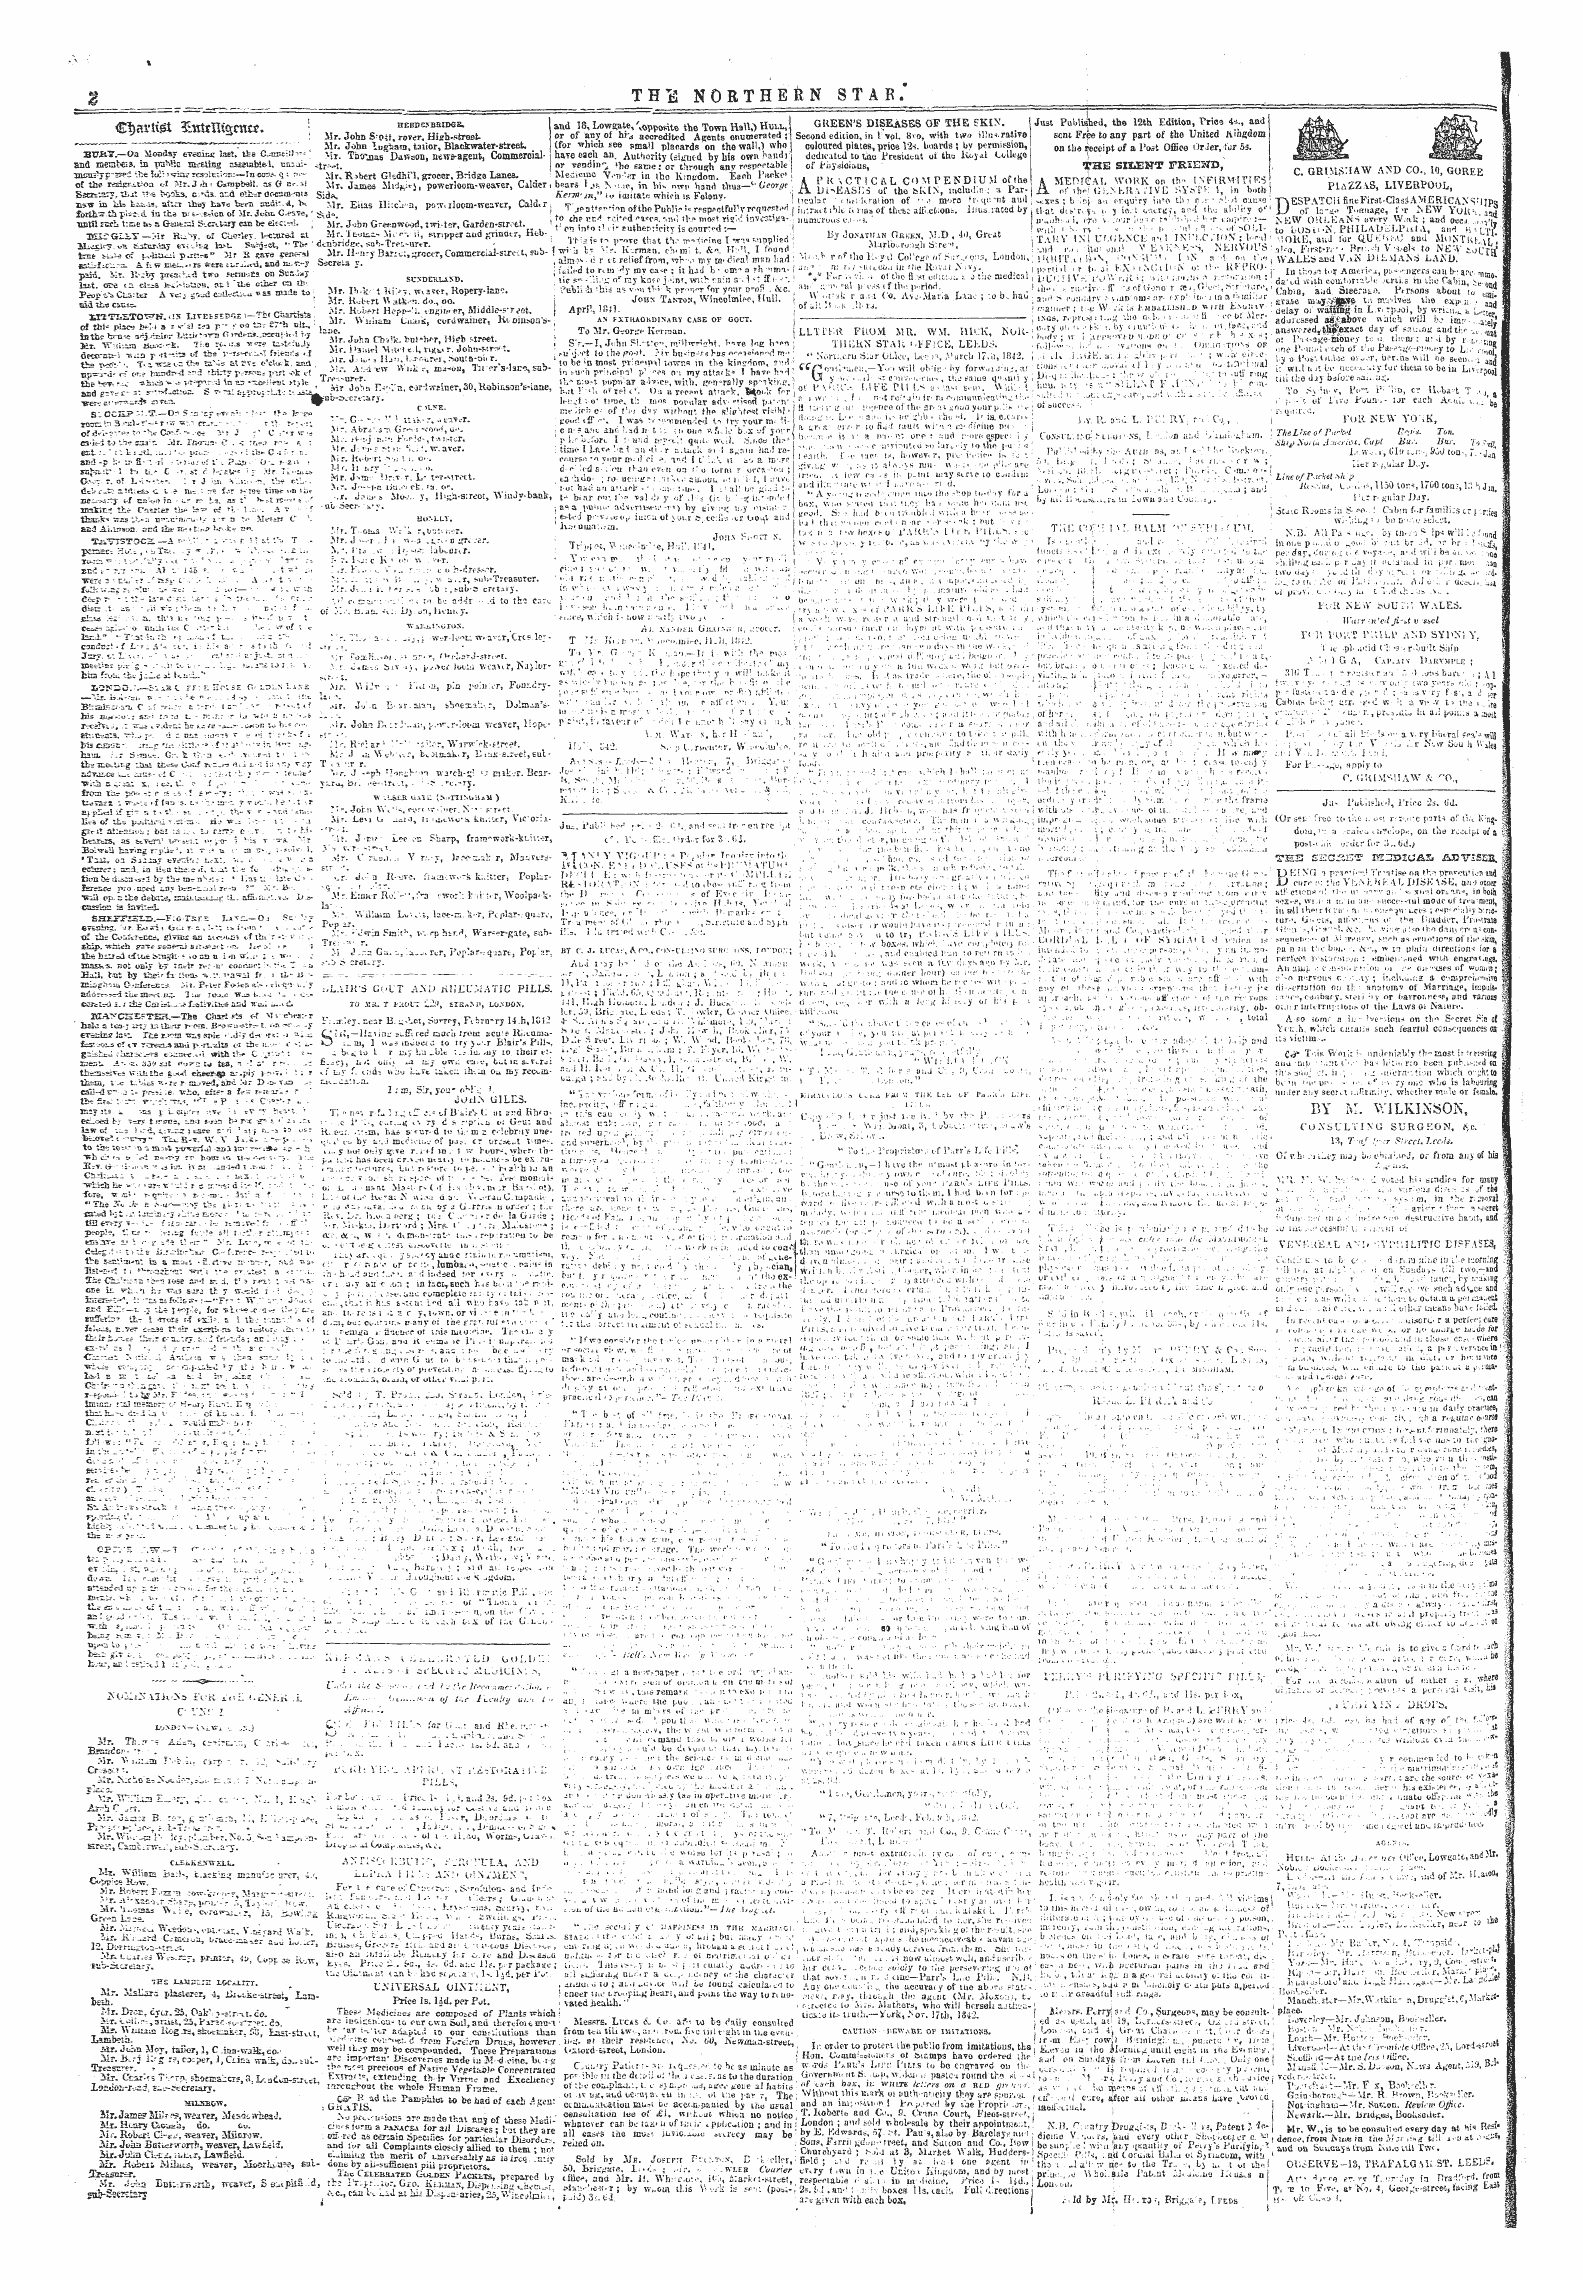 Northern Star (1837-1852): jS F Y, 5th edition - Ad00223